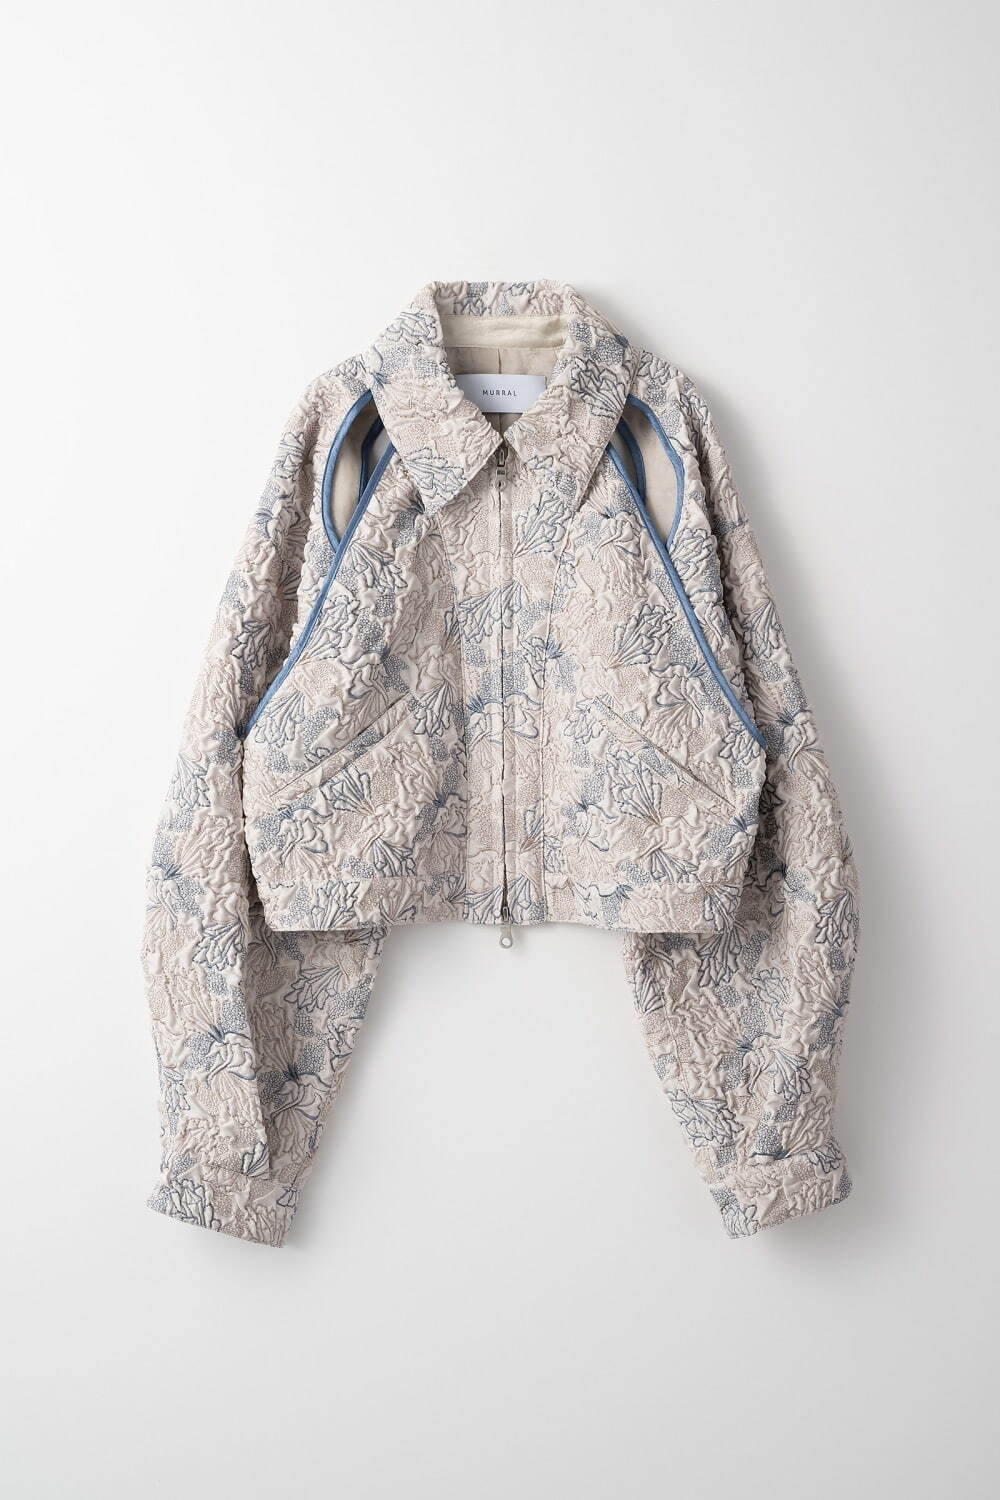 Quartz embroidery jacket  58,300円